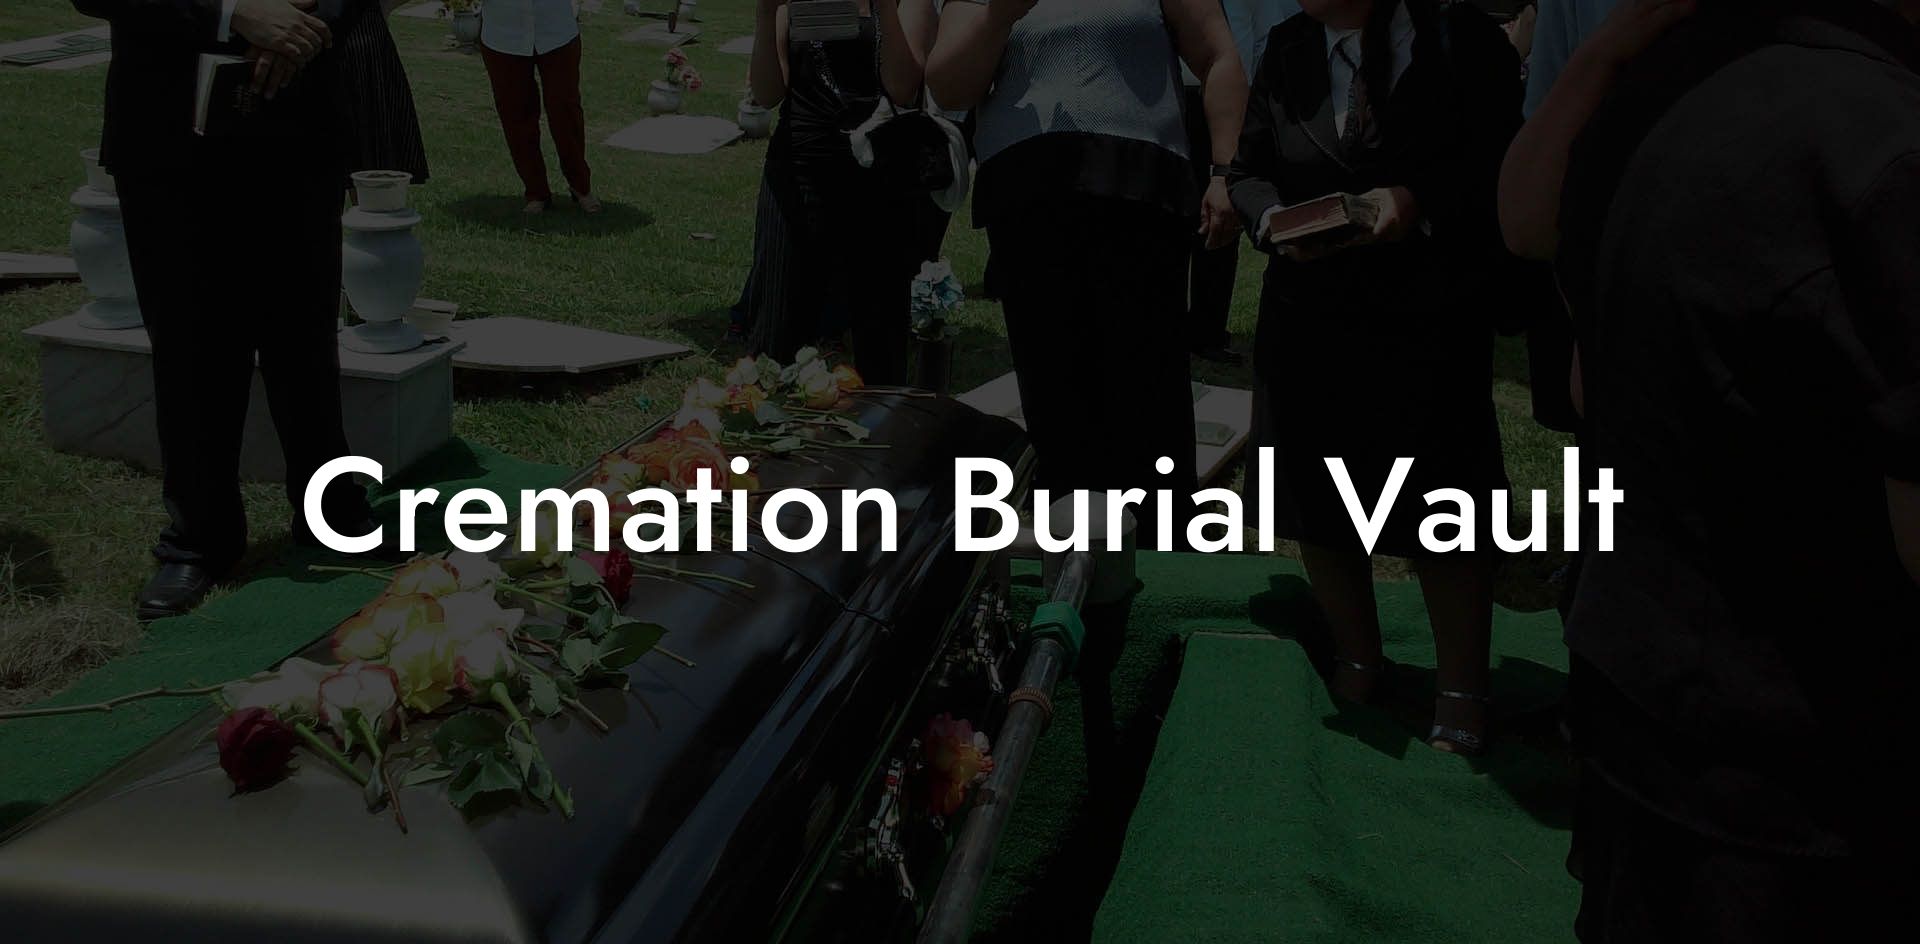 Cremation Burial Vault